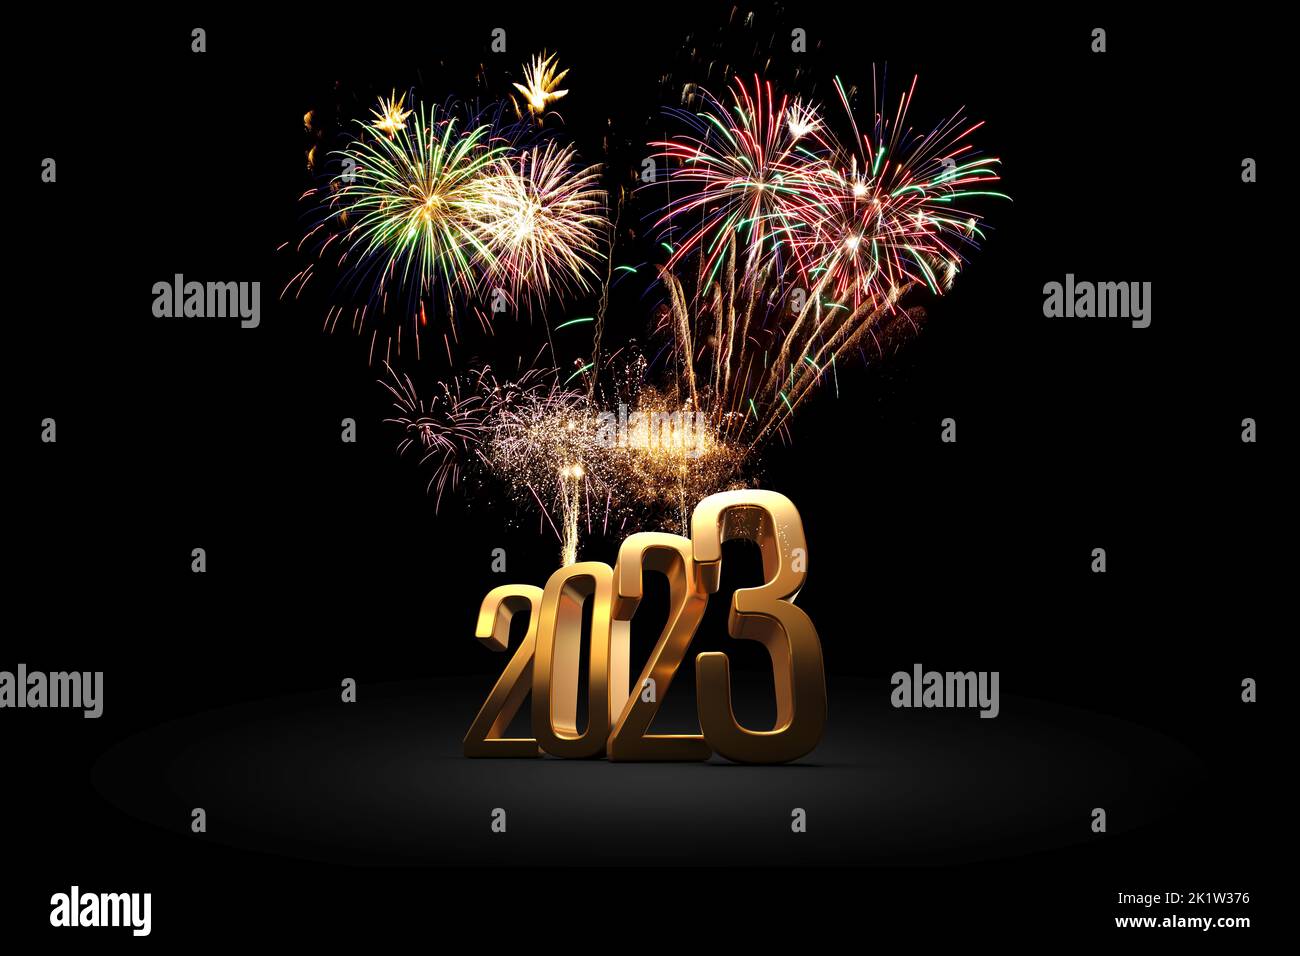 2023 celebration gold - 3D rendering text on black background Stock Photo